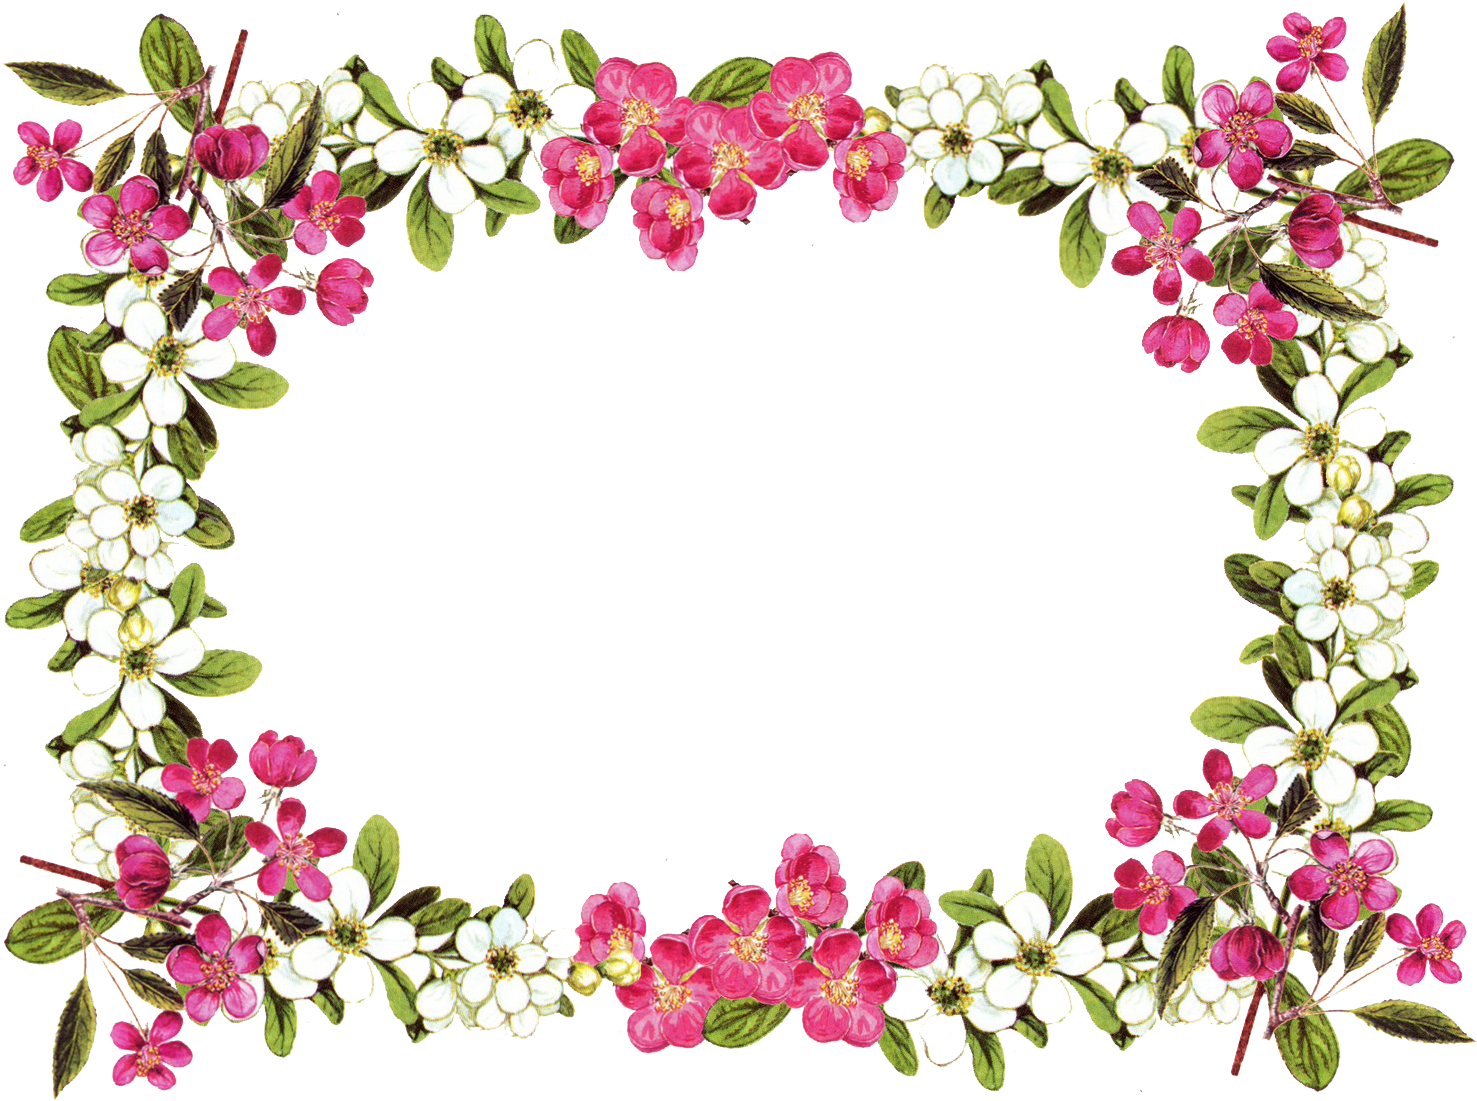 A Rectangular Frame Of Flowers